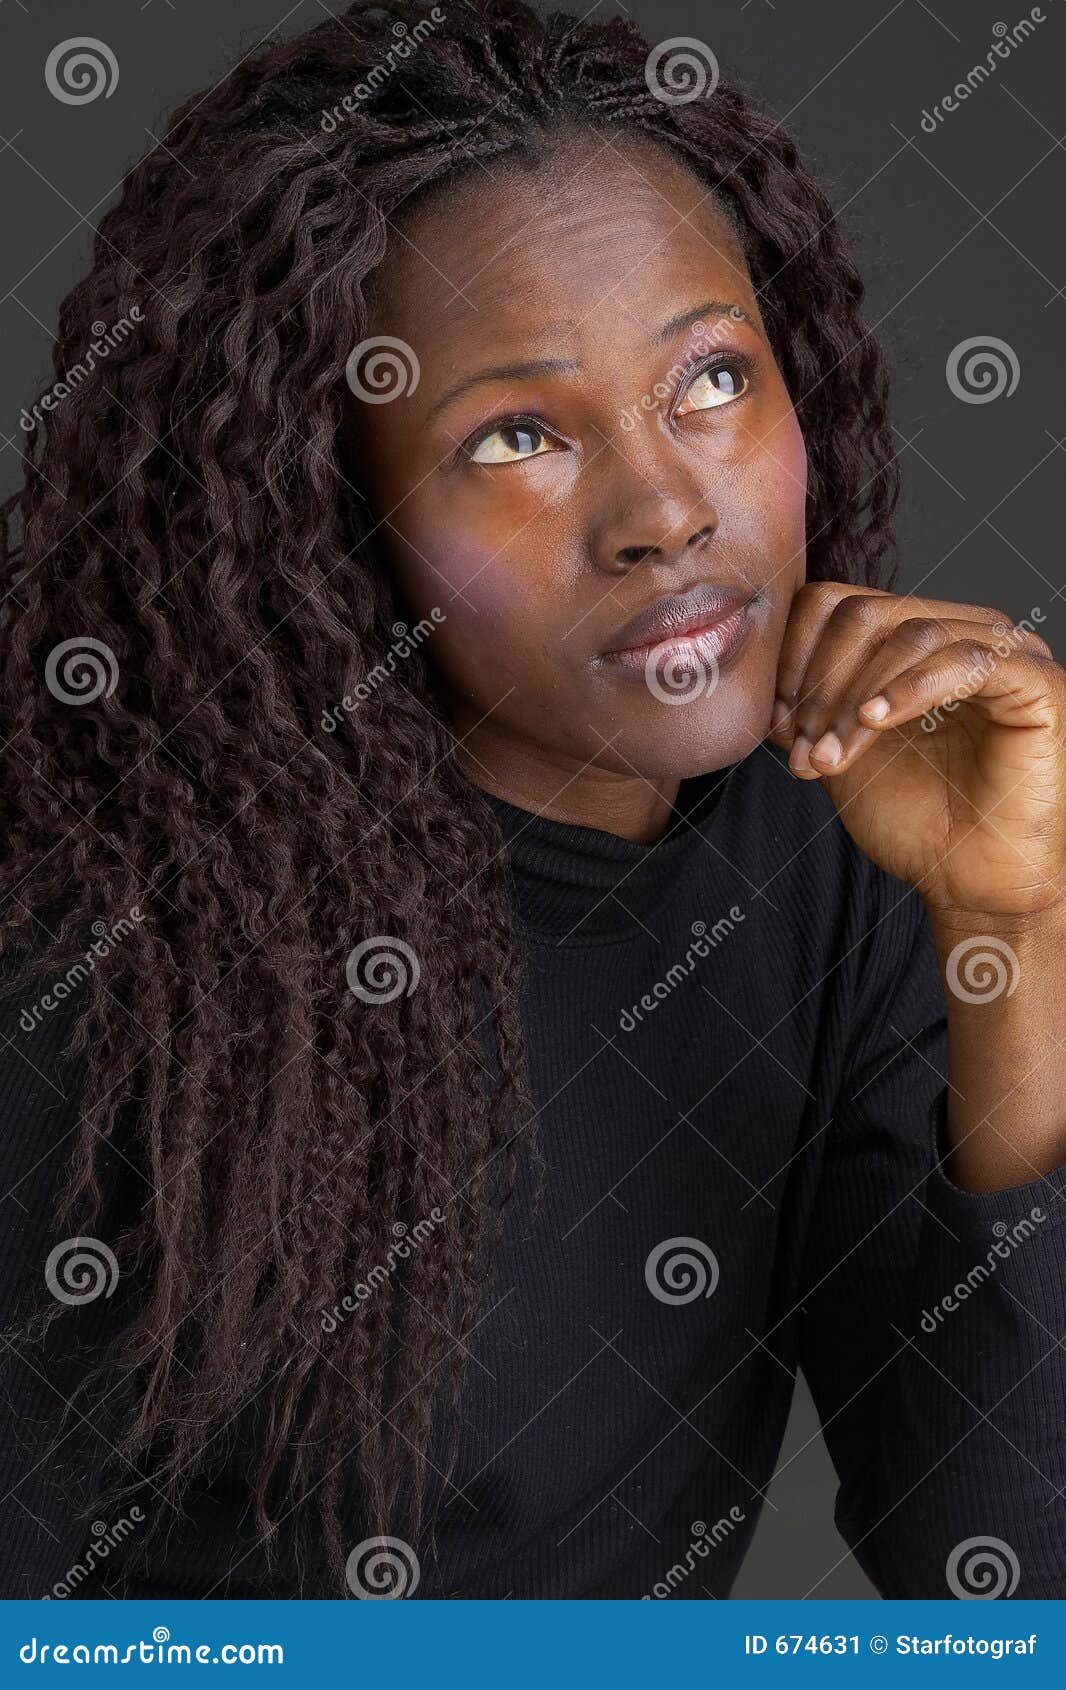 Top 999+ Black Woman Wallpaper Full HD, 4K Free to Use